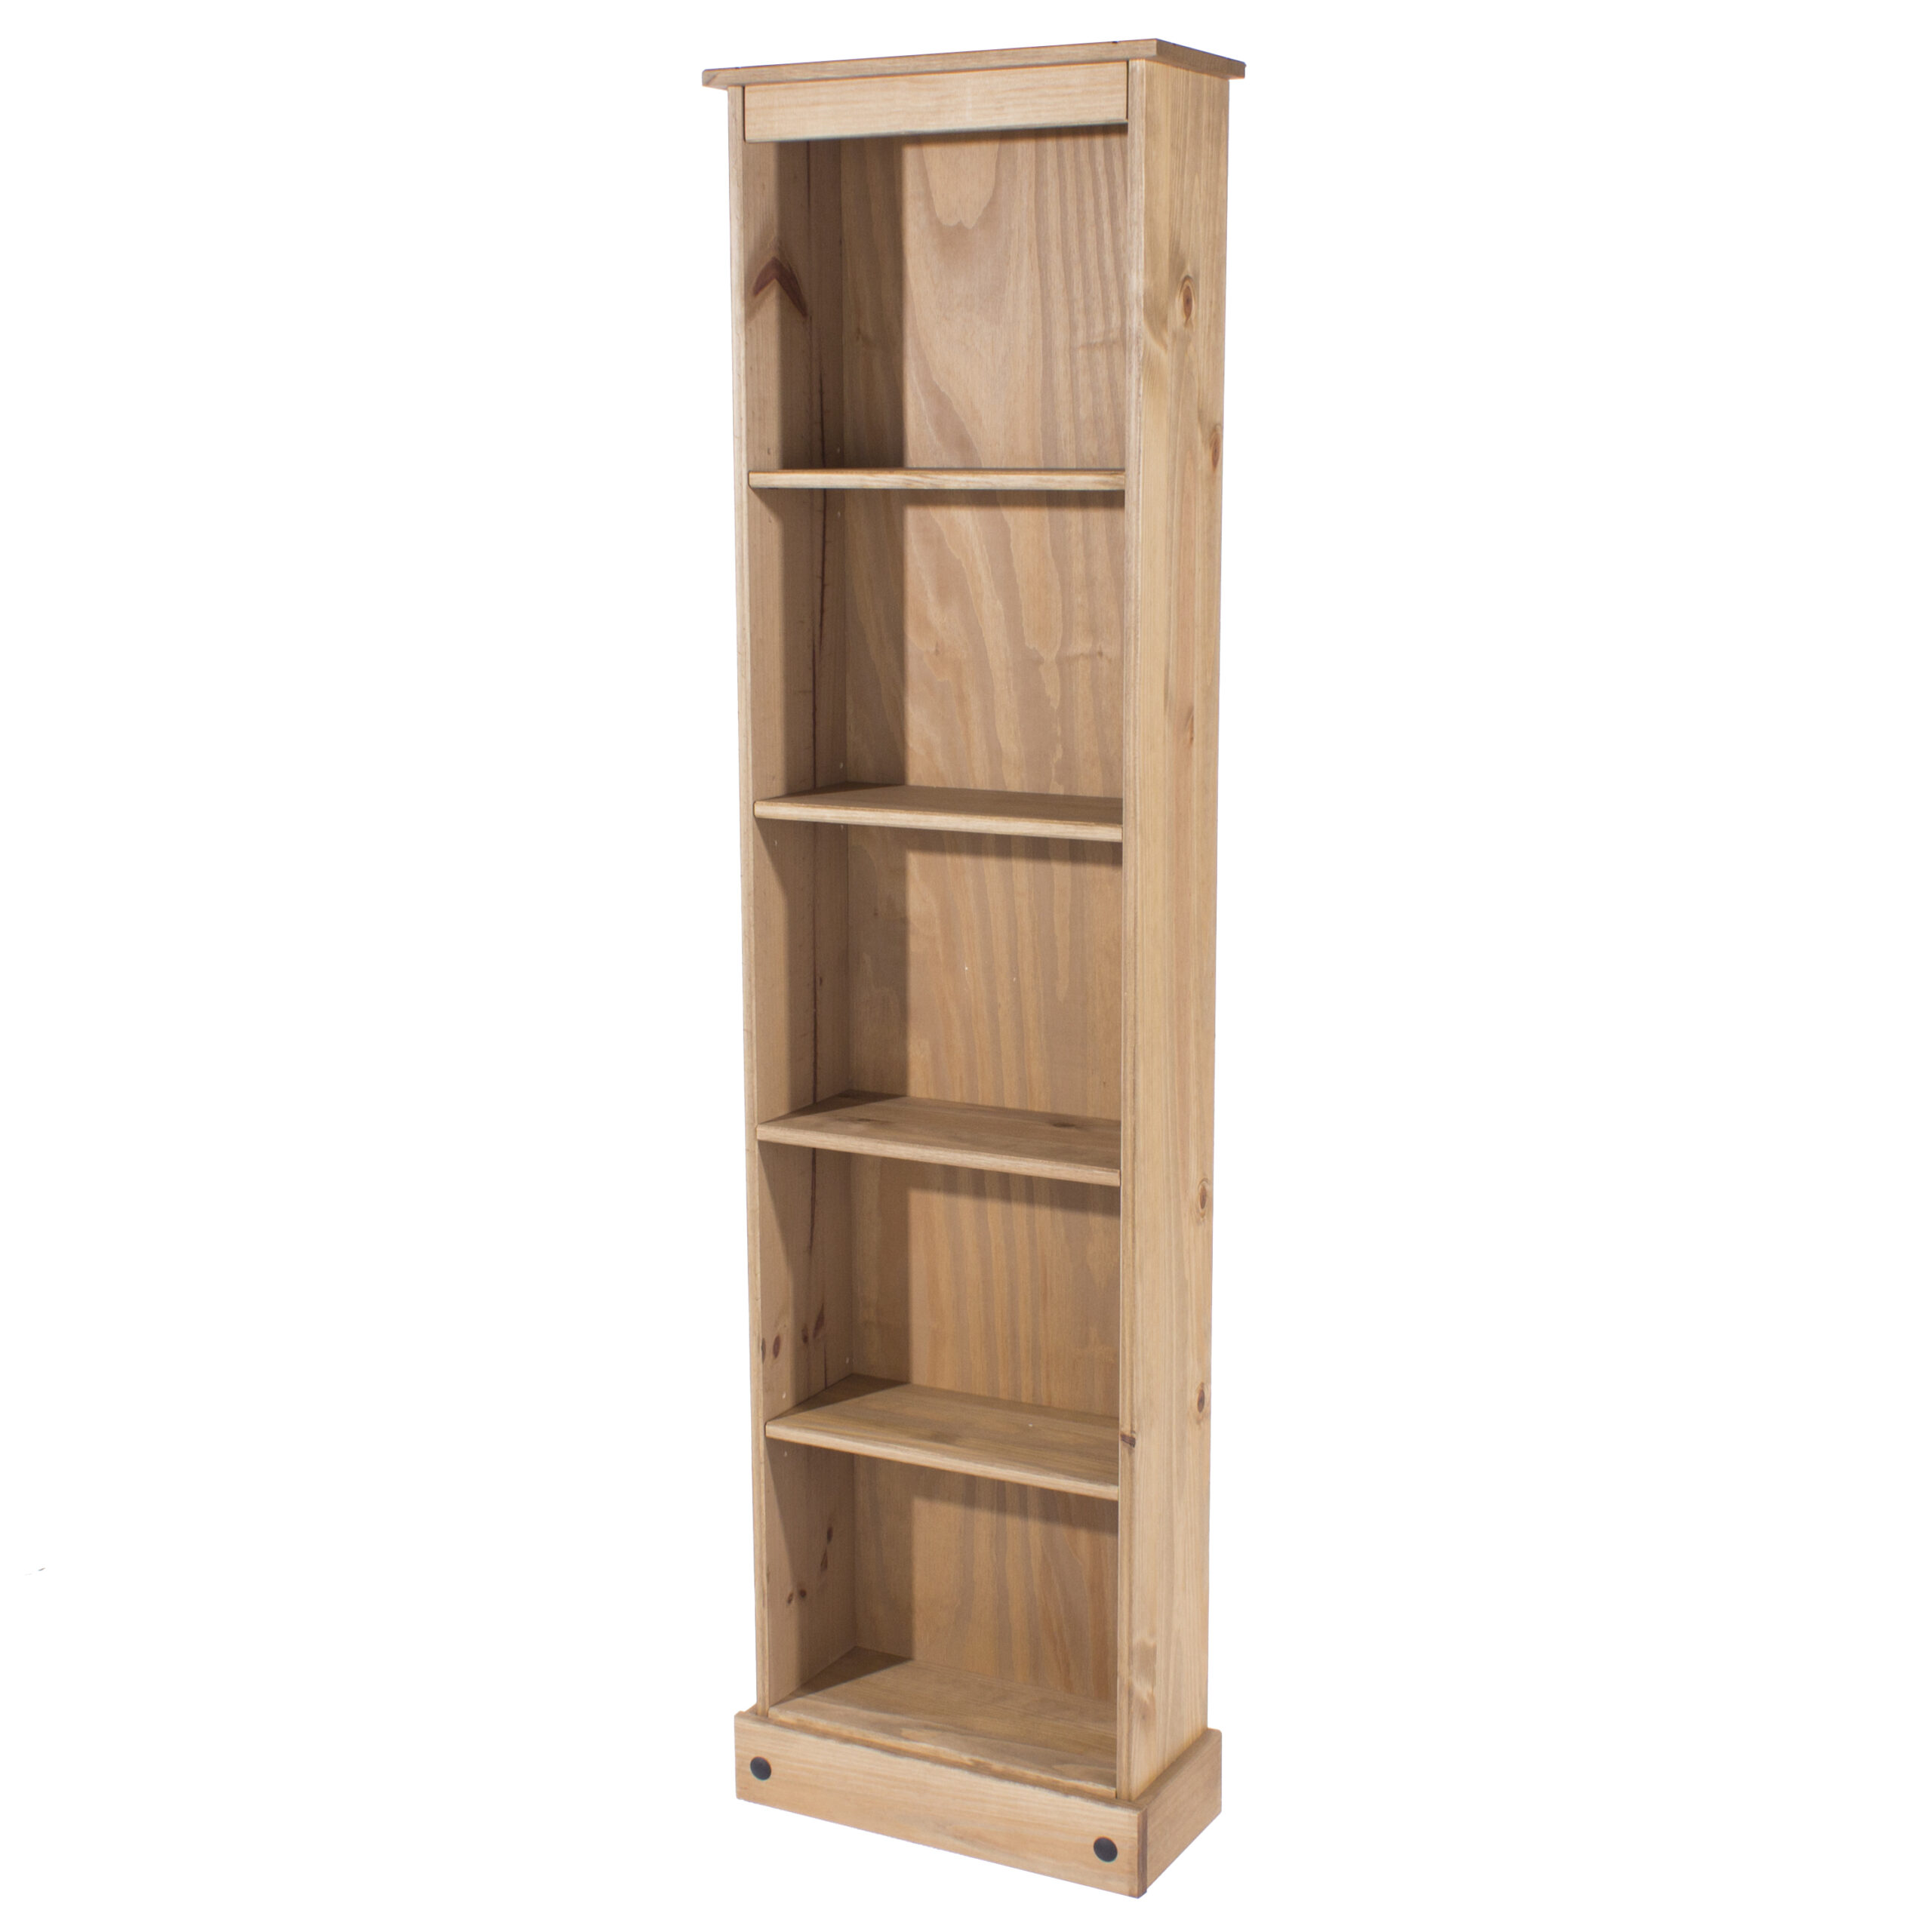 Cortan tall narrow bookcase